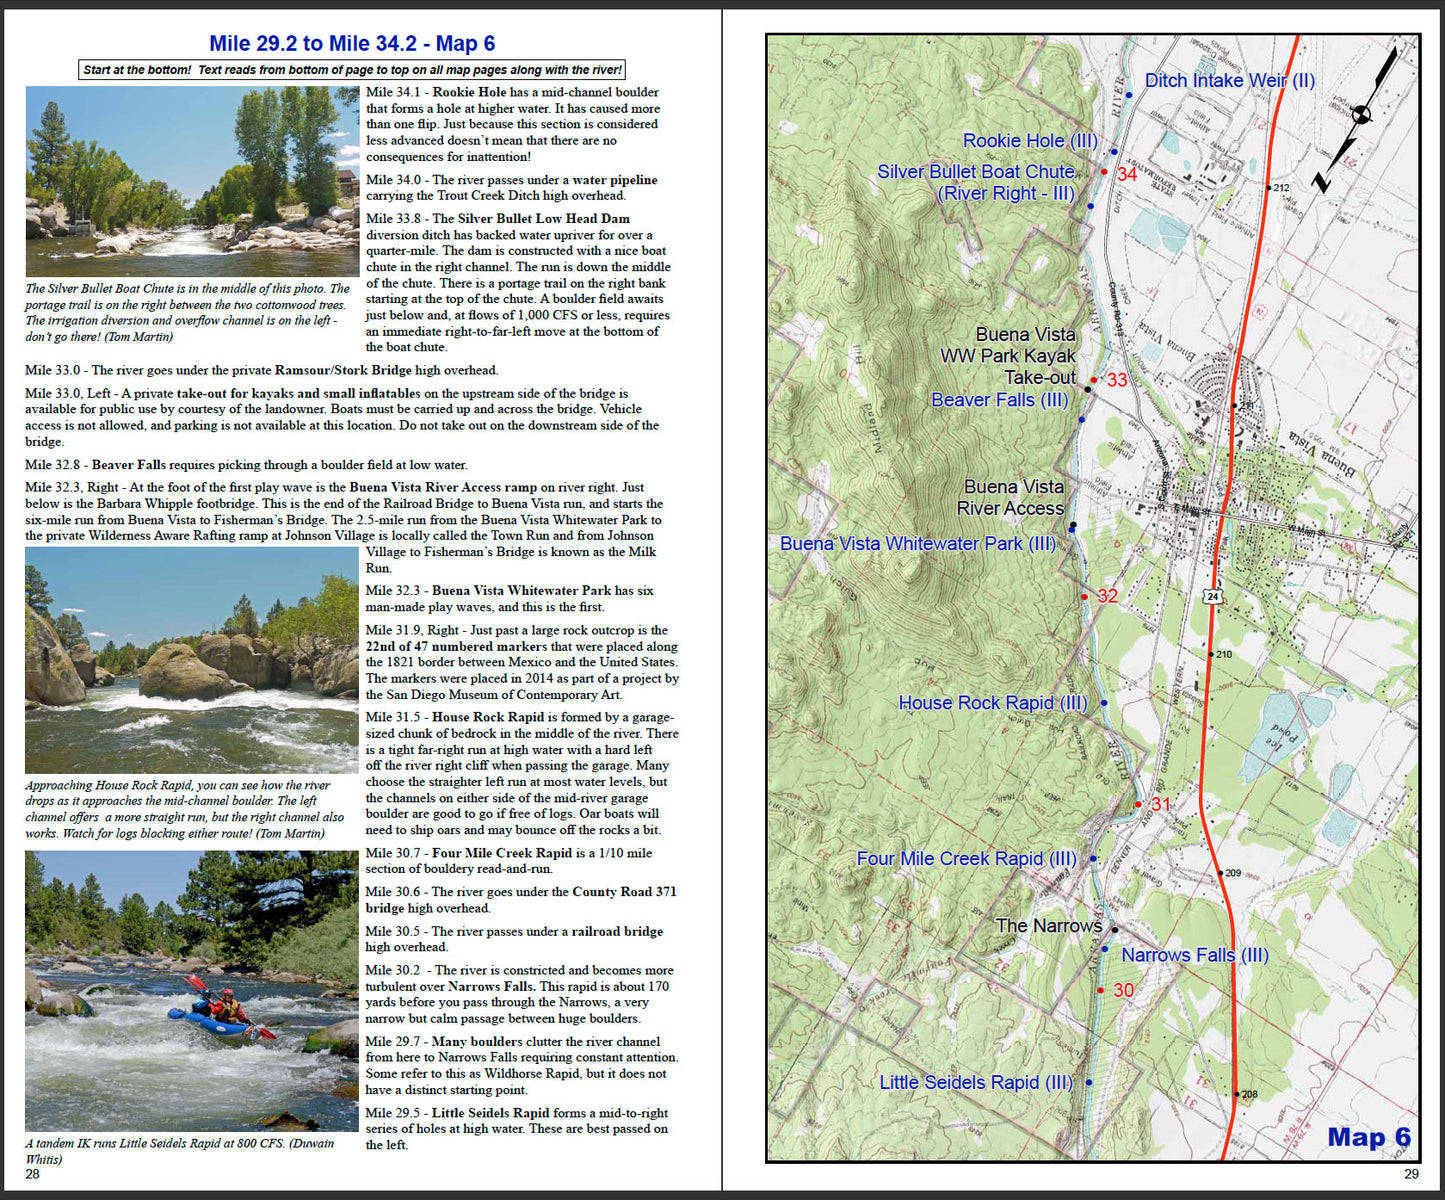 A Rivermaps Guide to the Arkansas River in Colorado.